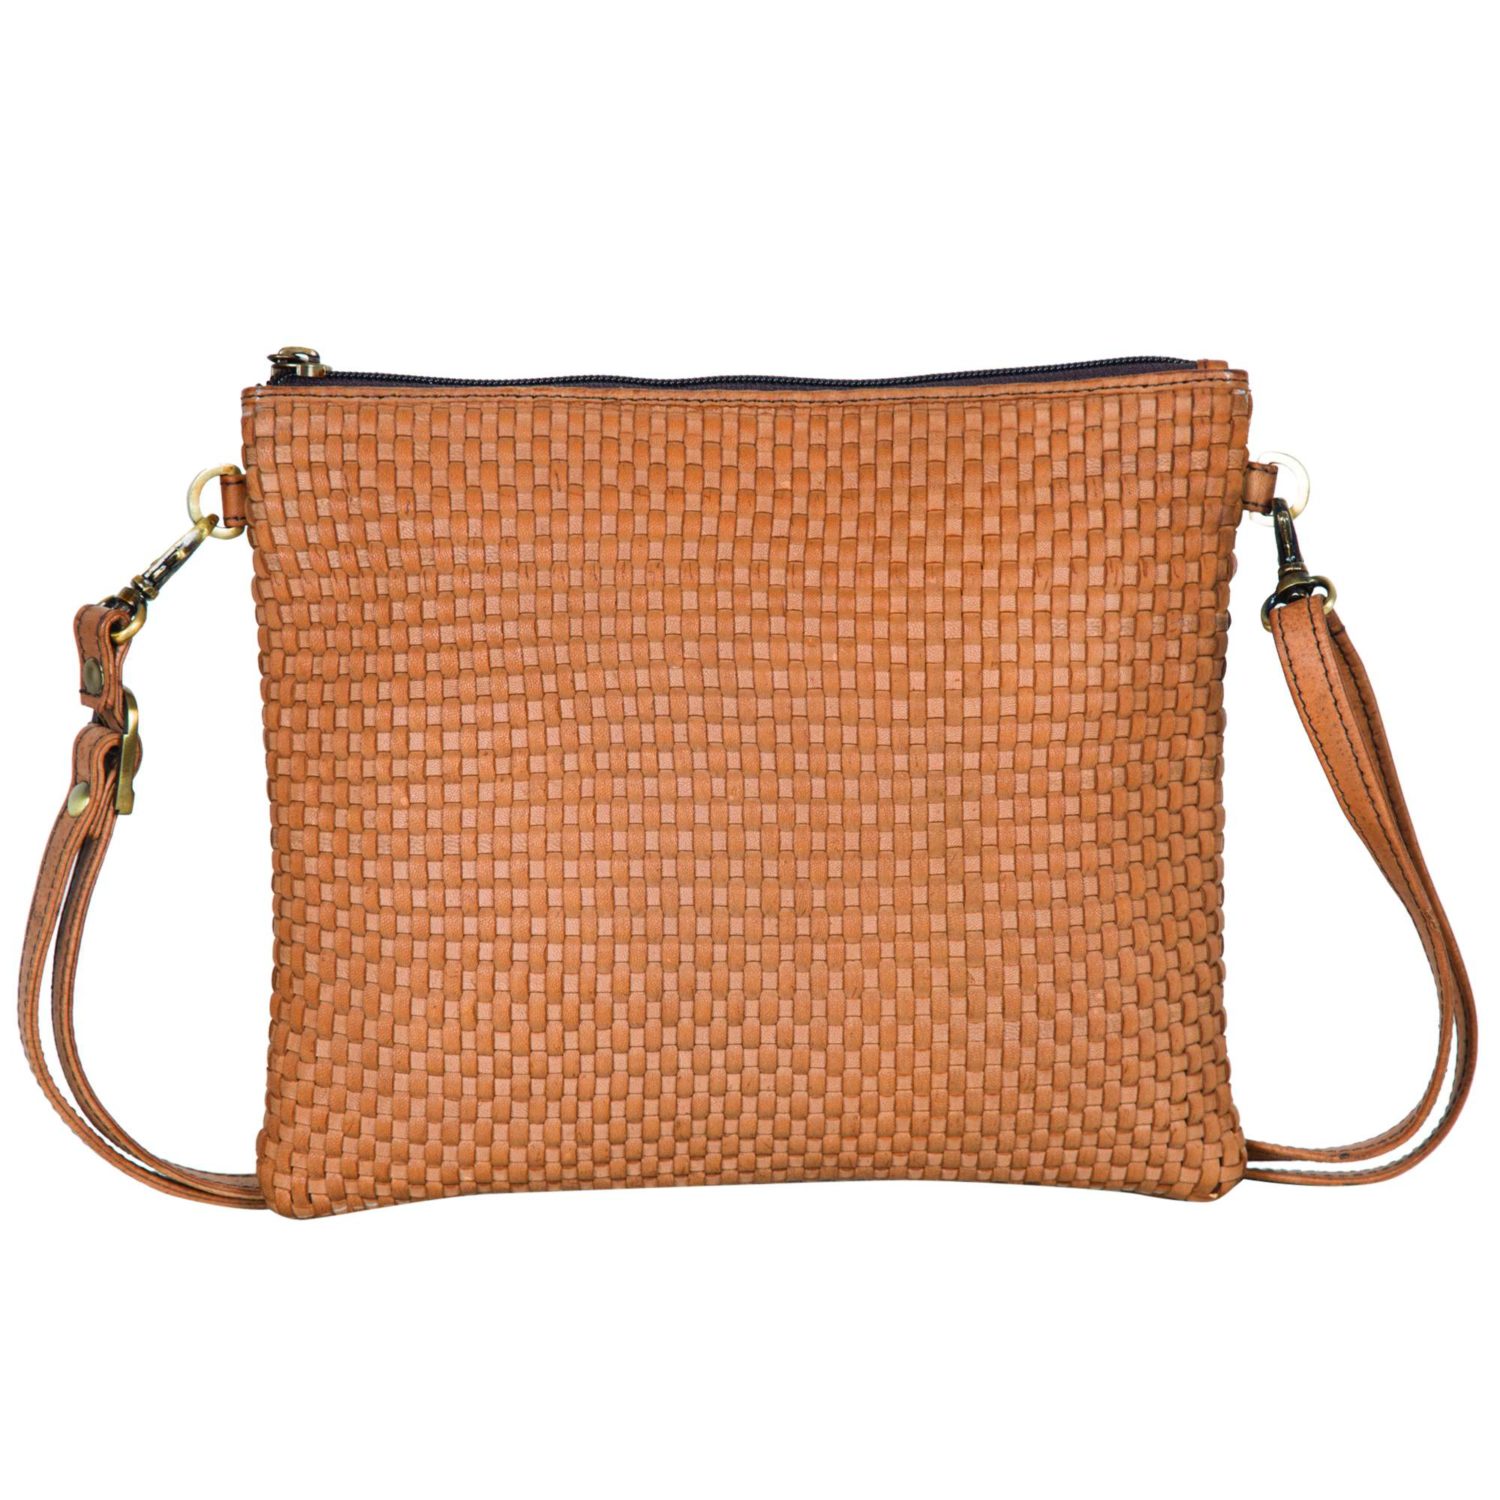 Woven Clutch Bag - Cowhide Clutch Bag Online Shop In AUS